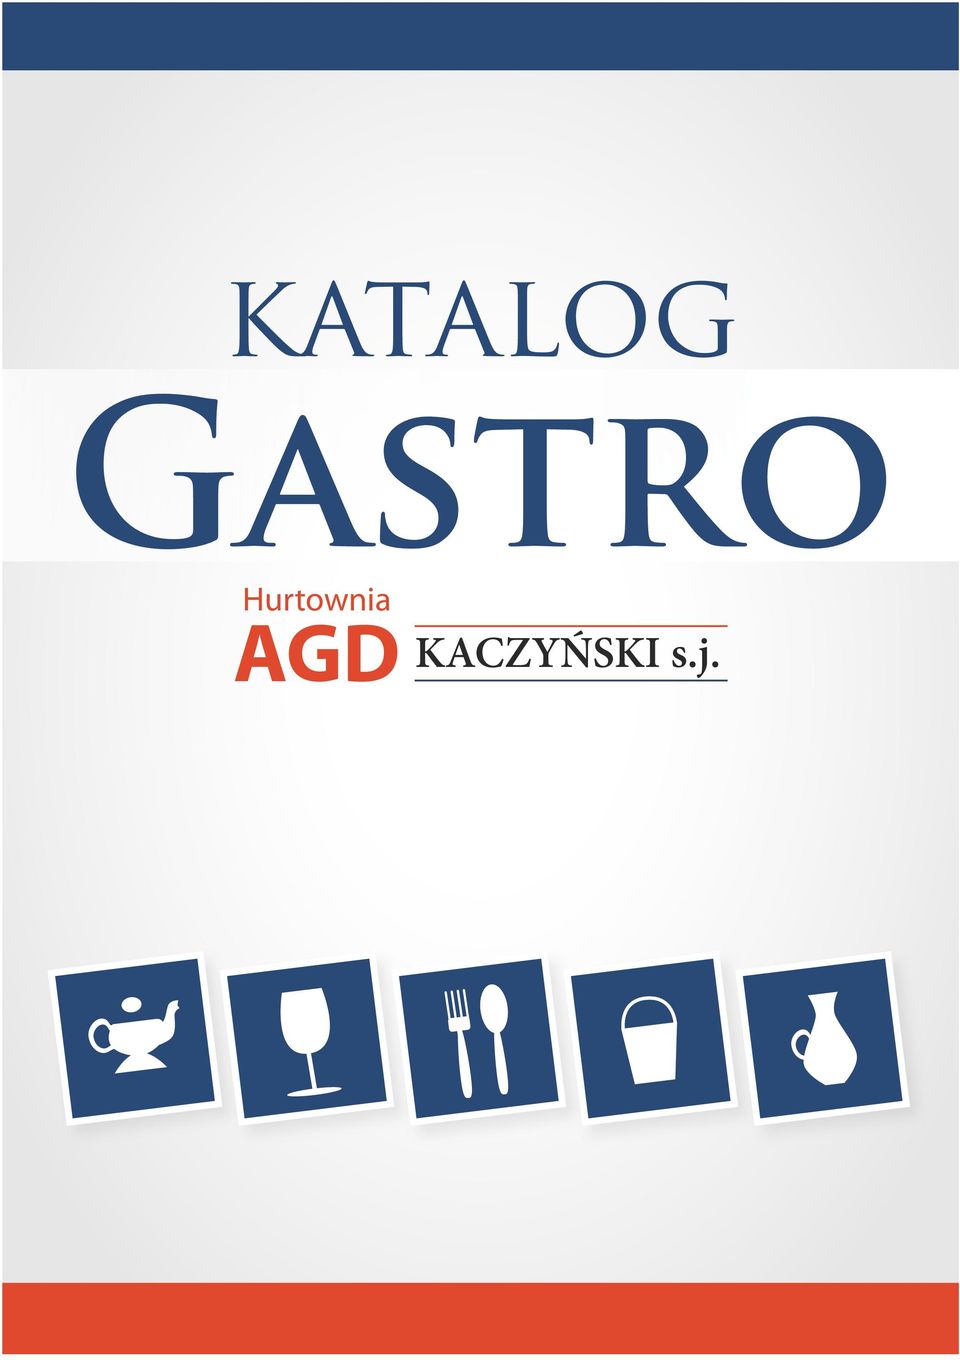 katalog Gastro Hurtownia AGD KACZYŃSKI s.j. - PDF Free Download